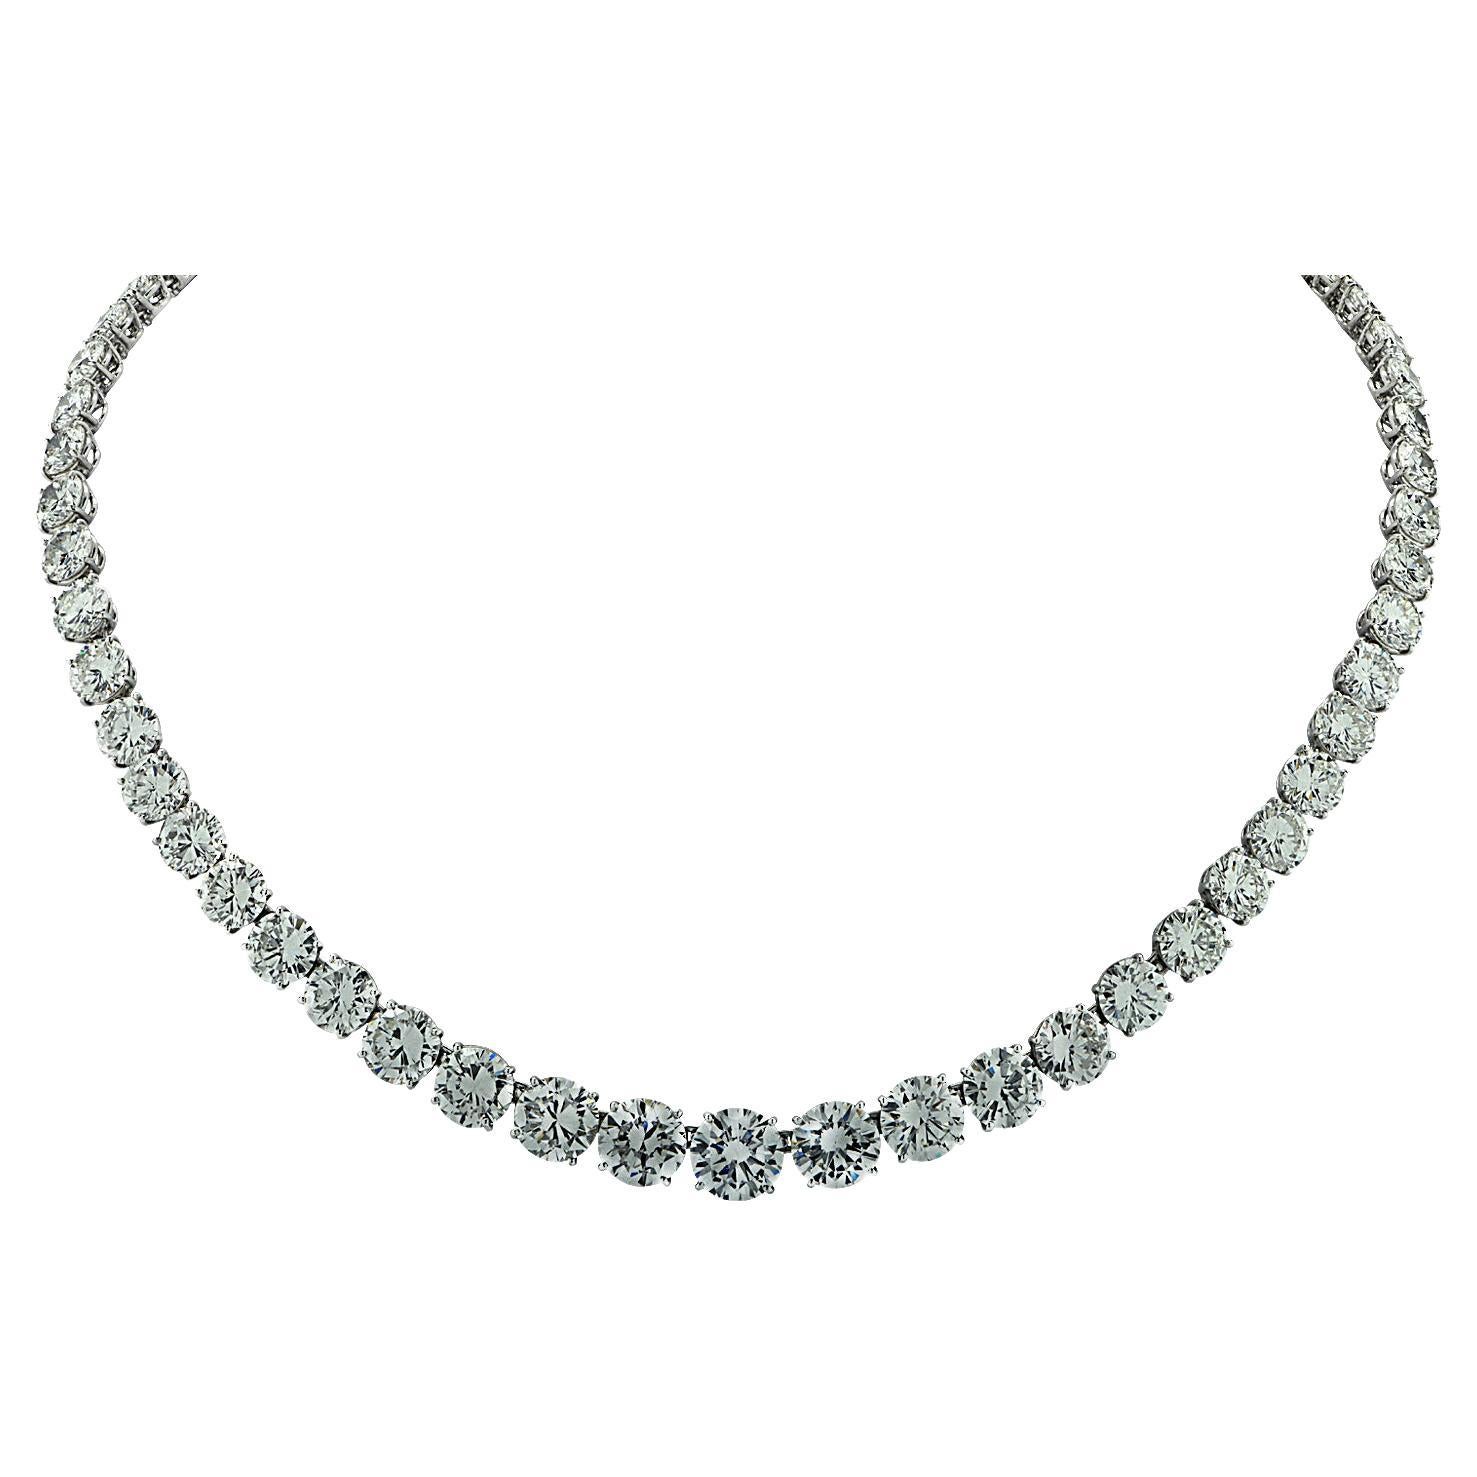 Harry Winston GIA Certified 44.54 Carat Diamond Riviere Necklace